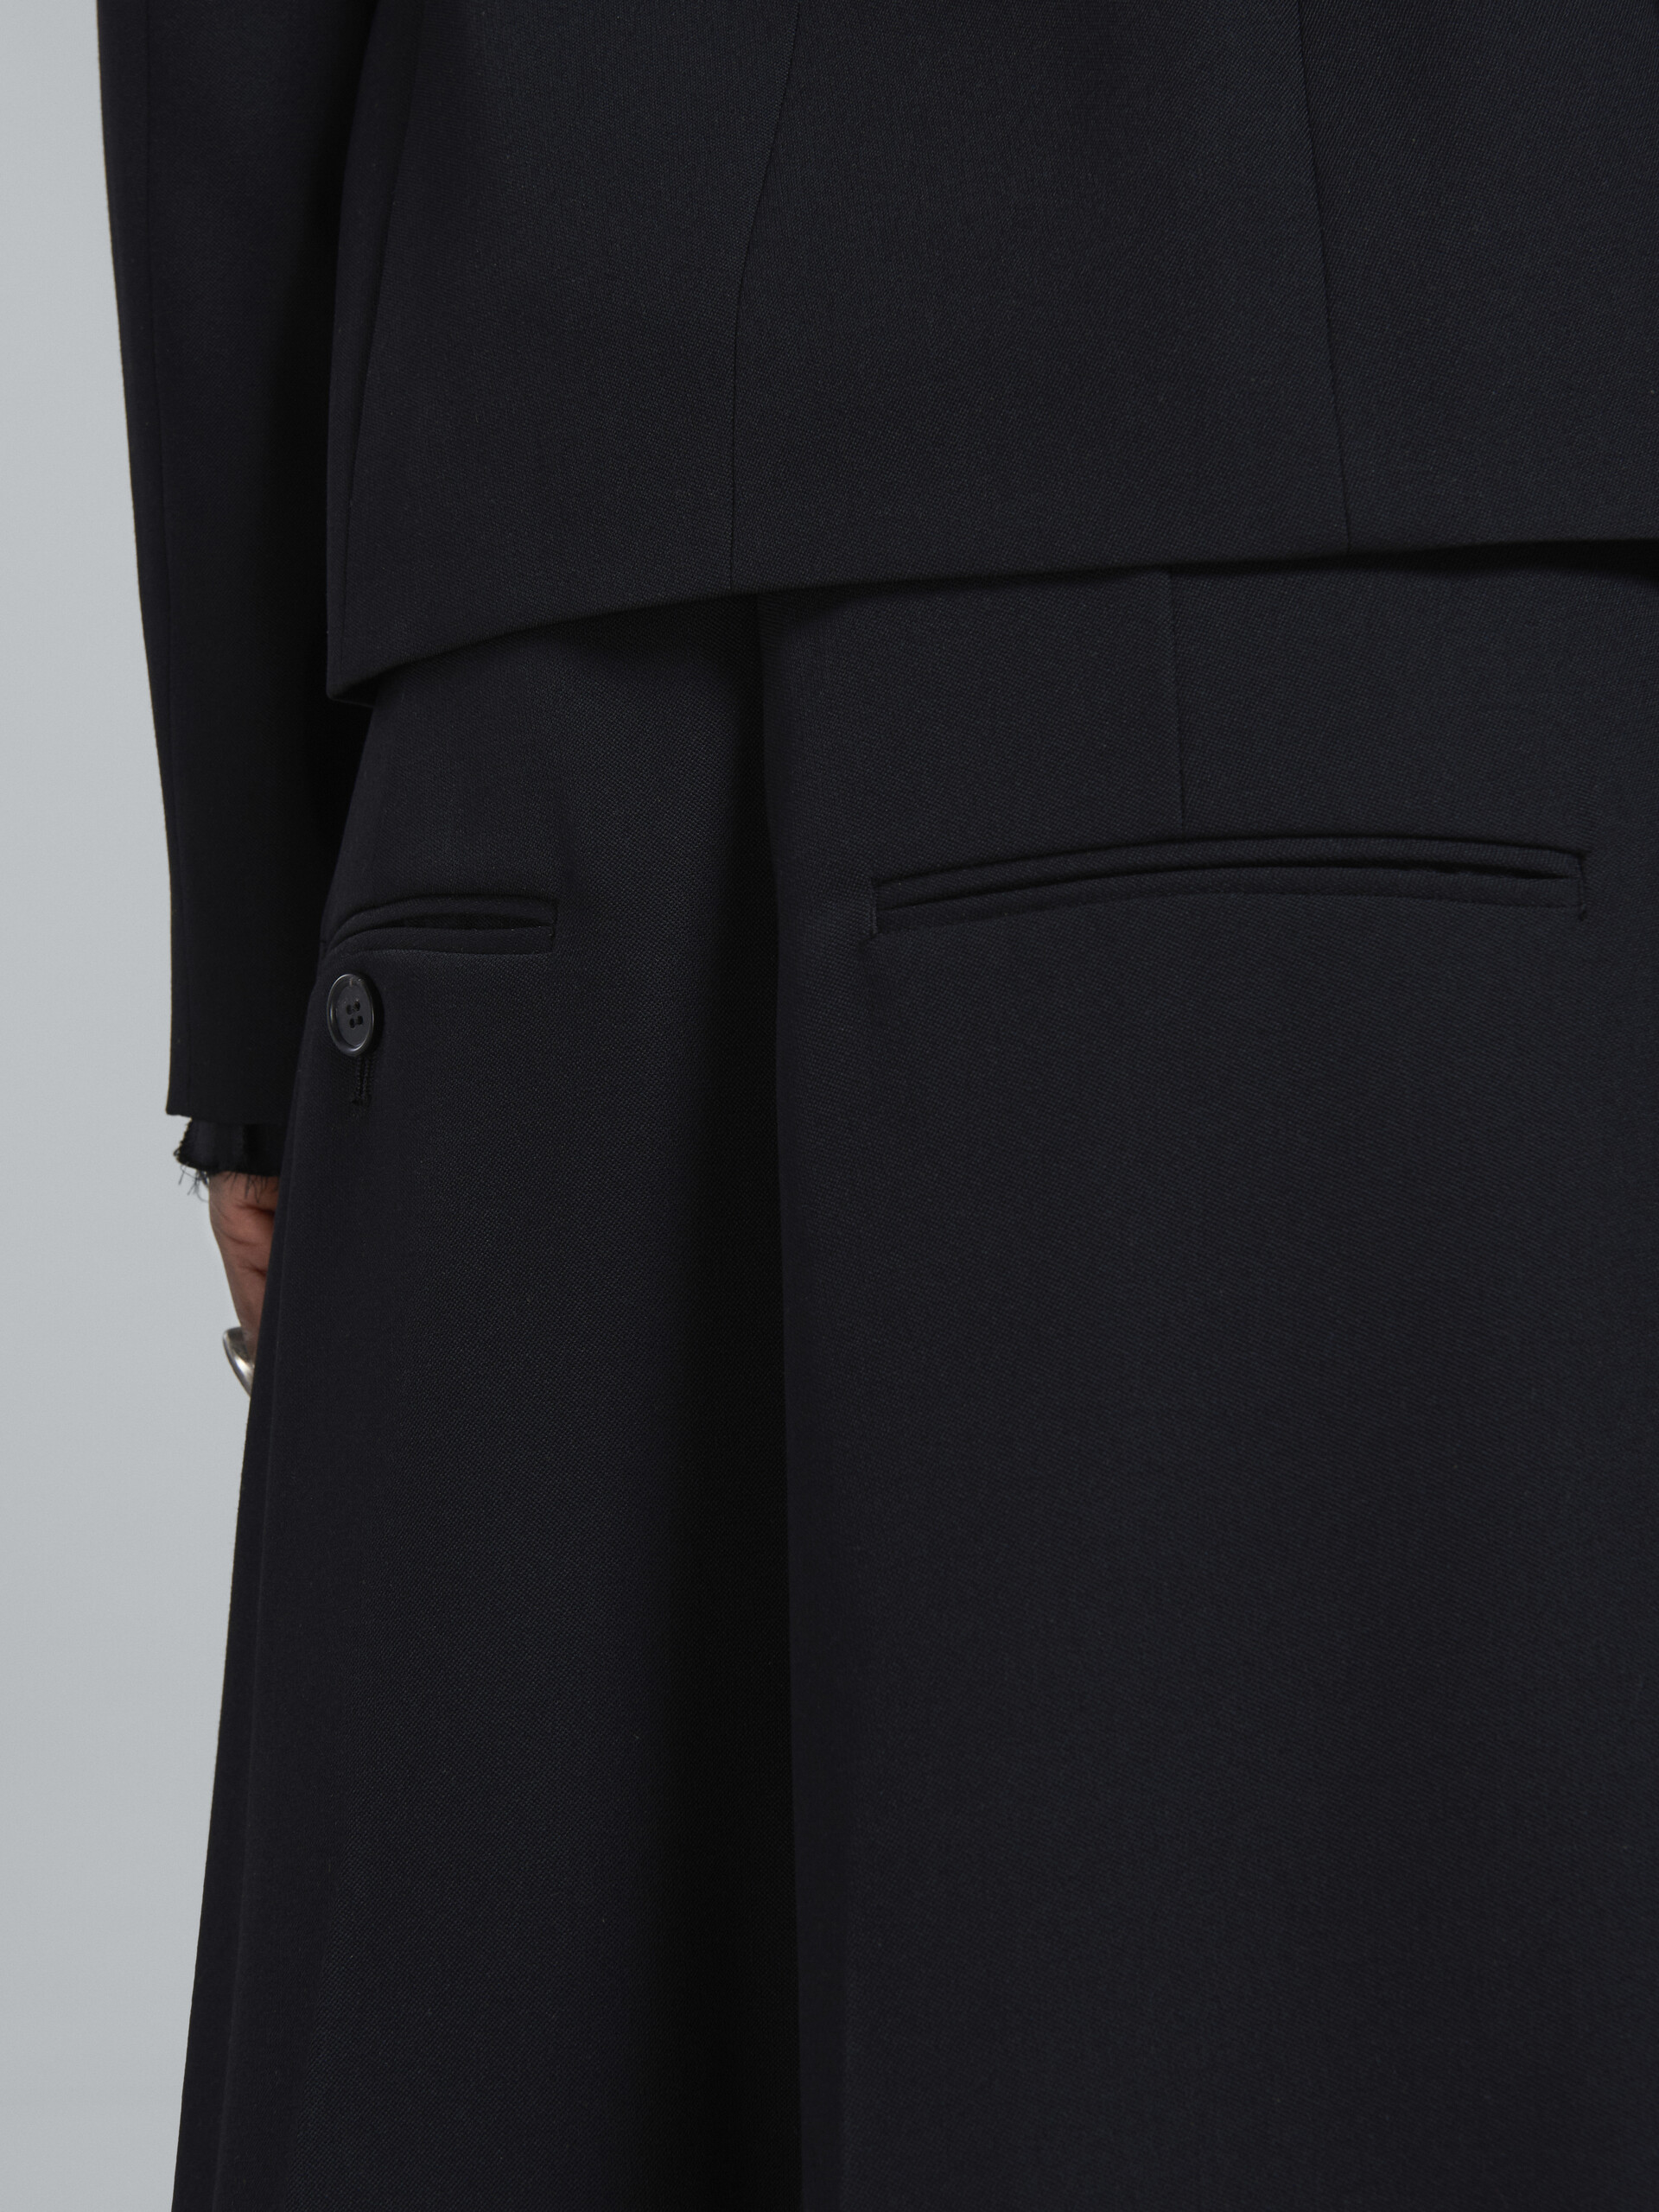 Cropped black wool pants - Pants - Image 4